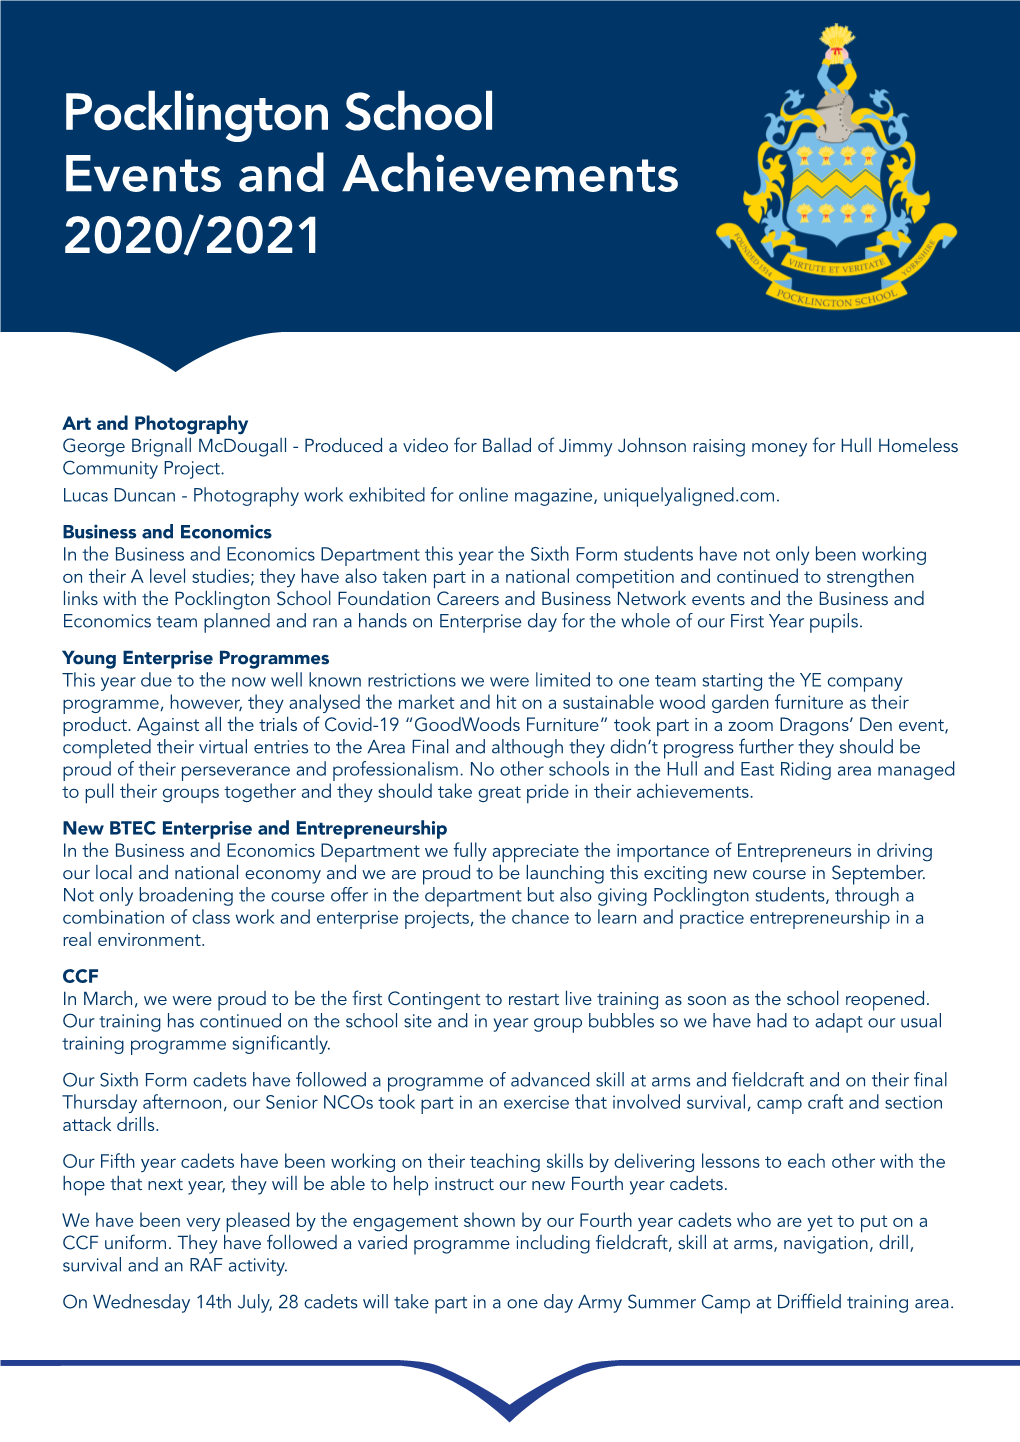 Pocklington School Events and Achievements 2020/2021